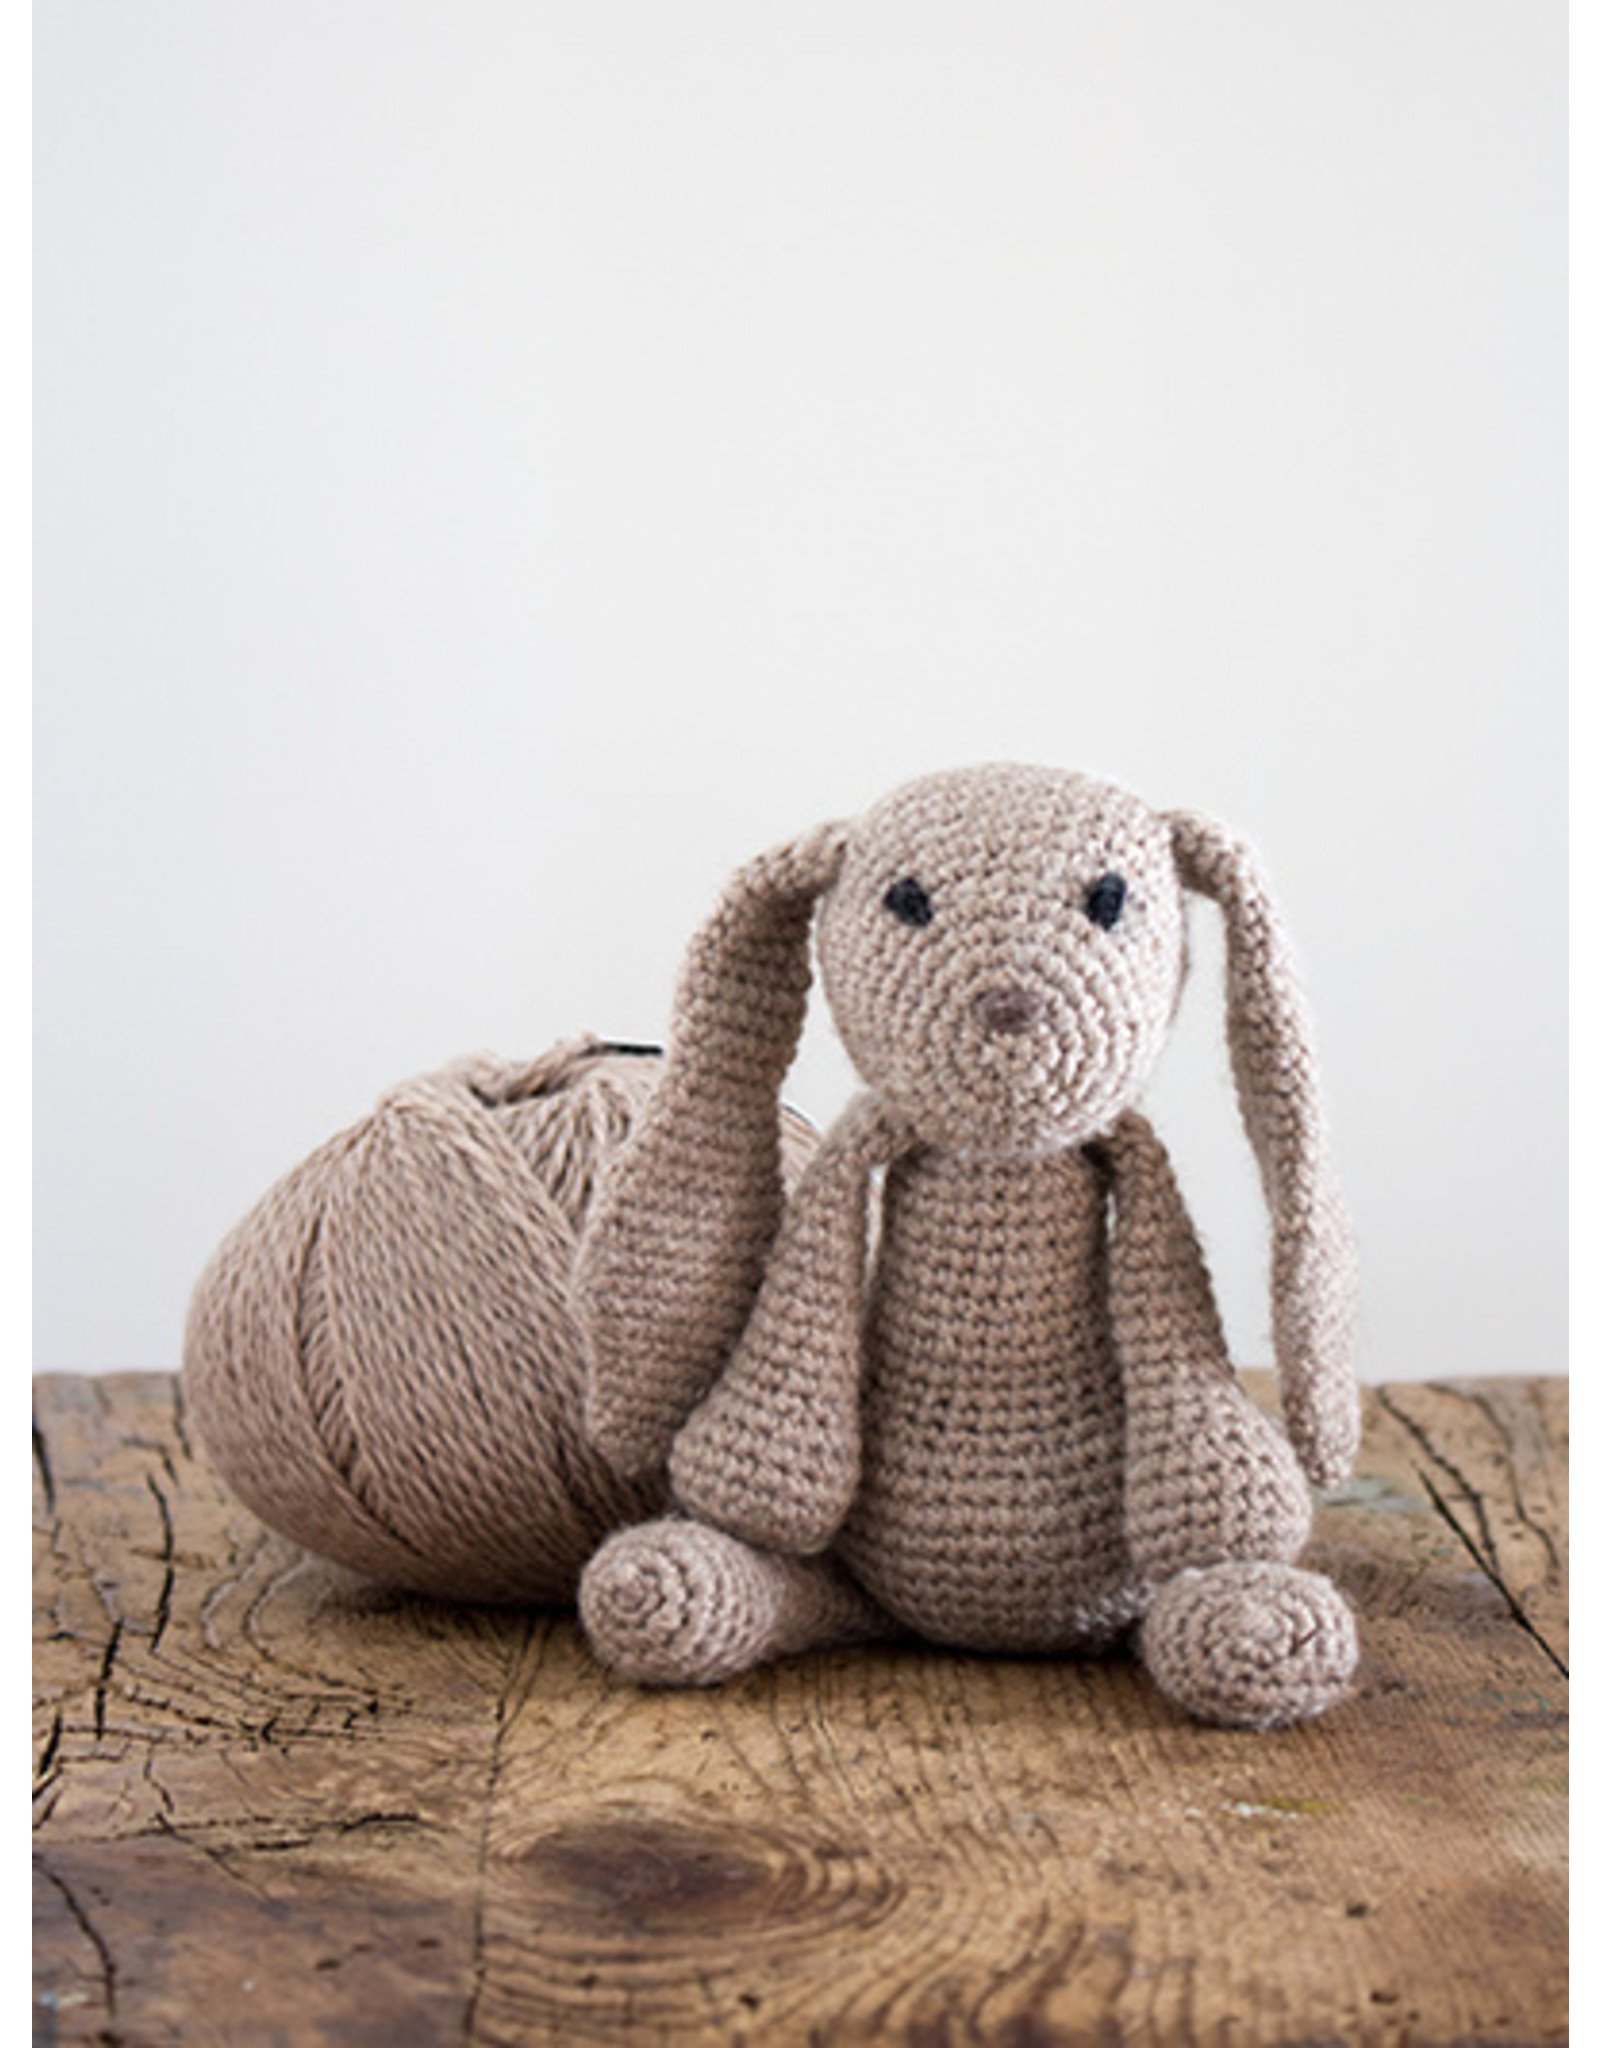 Crochet Class: Amigurumi Animals - Stranded by the Sea